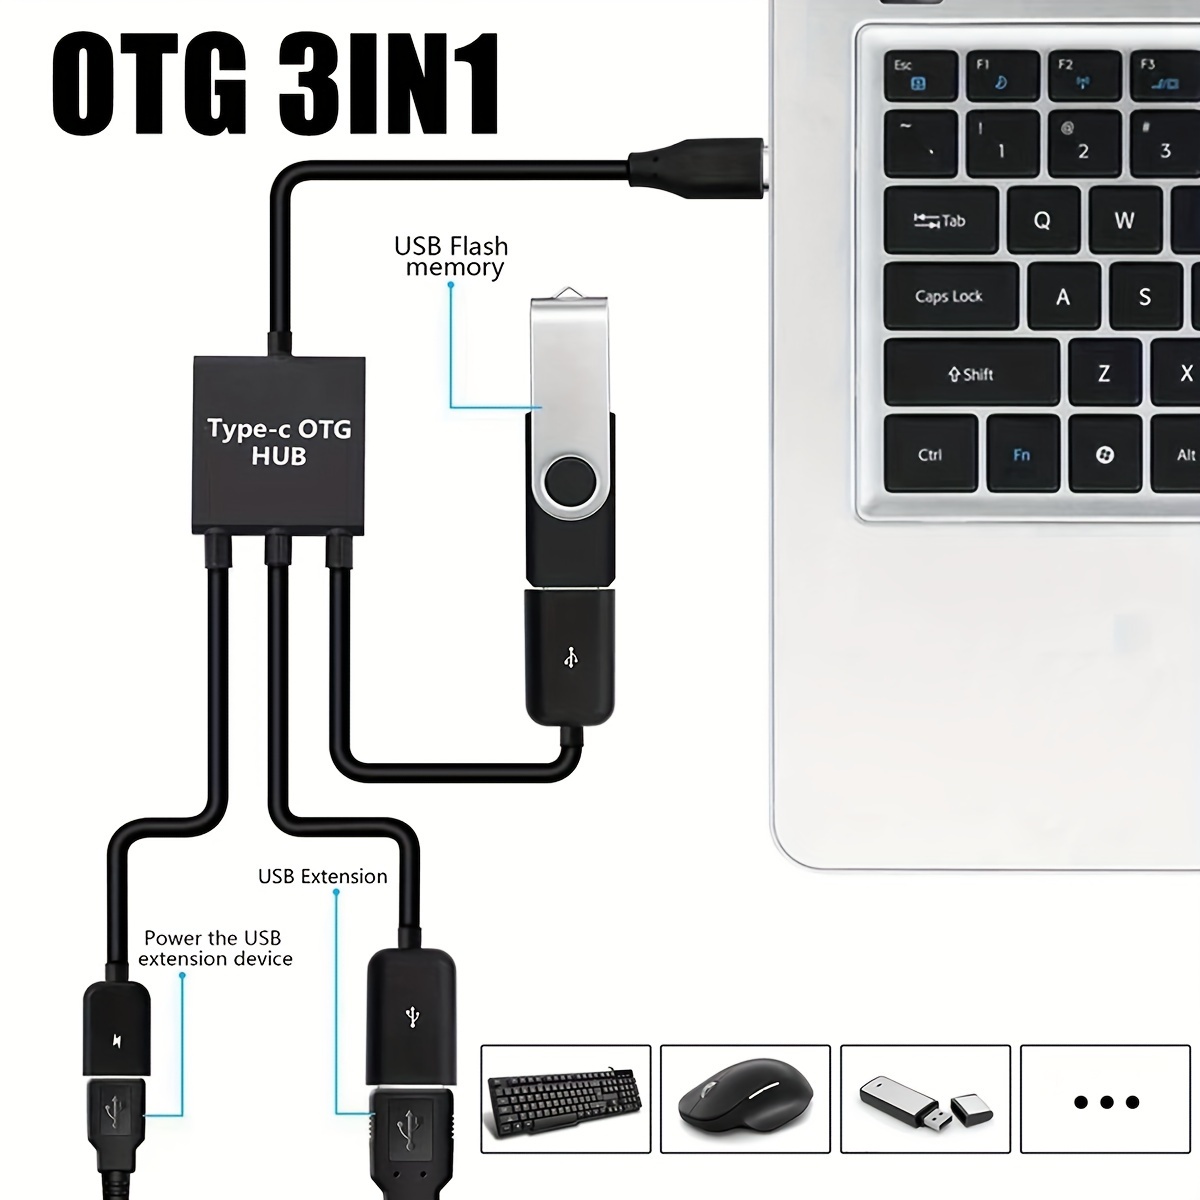 Câble USB OTG pour Teclast T30, T30 Pro, M40, M16, P20HD, M30, M30 Pro,  T20, M89 , M89 Pro, Master T8 - Adaptateur On The Go